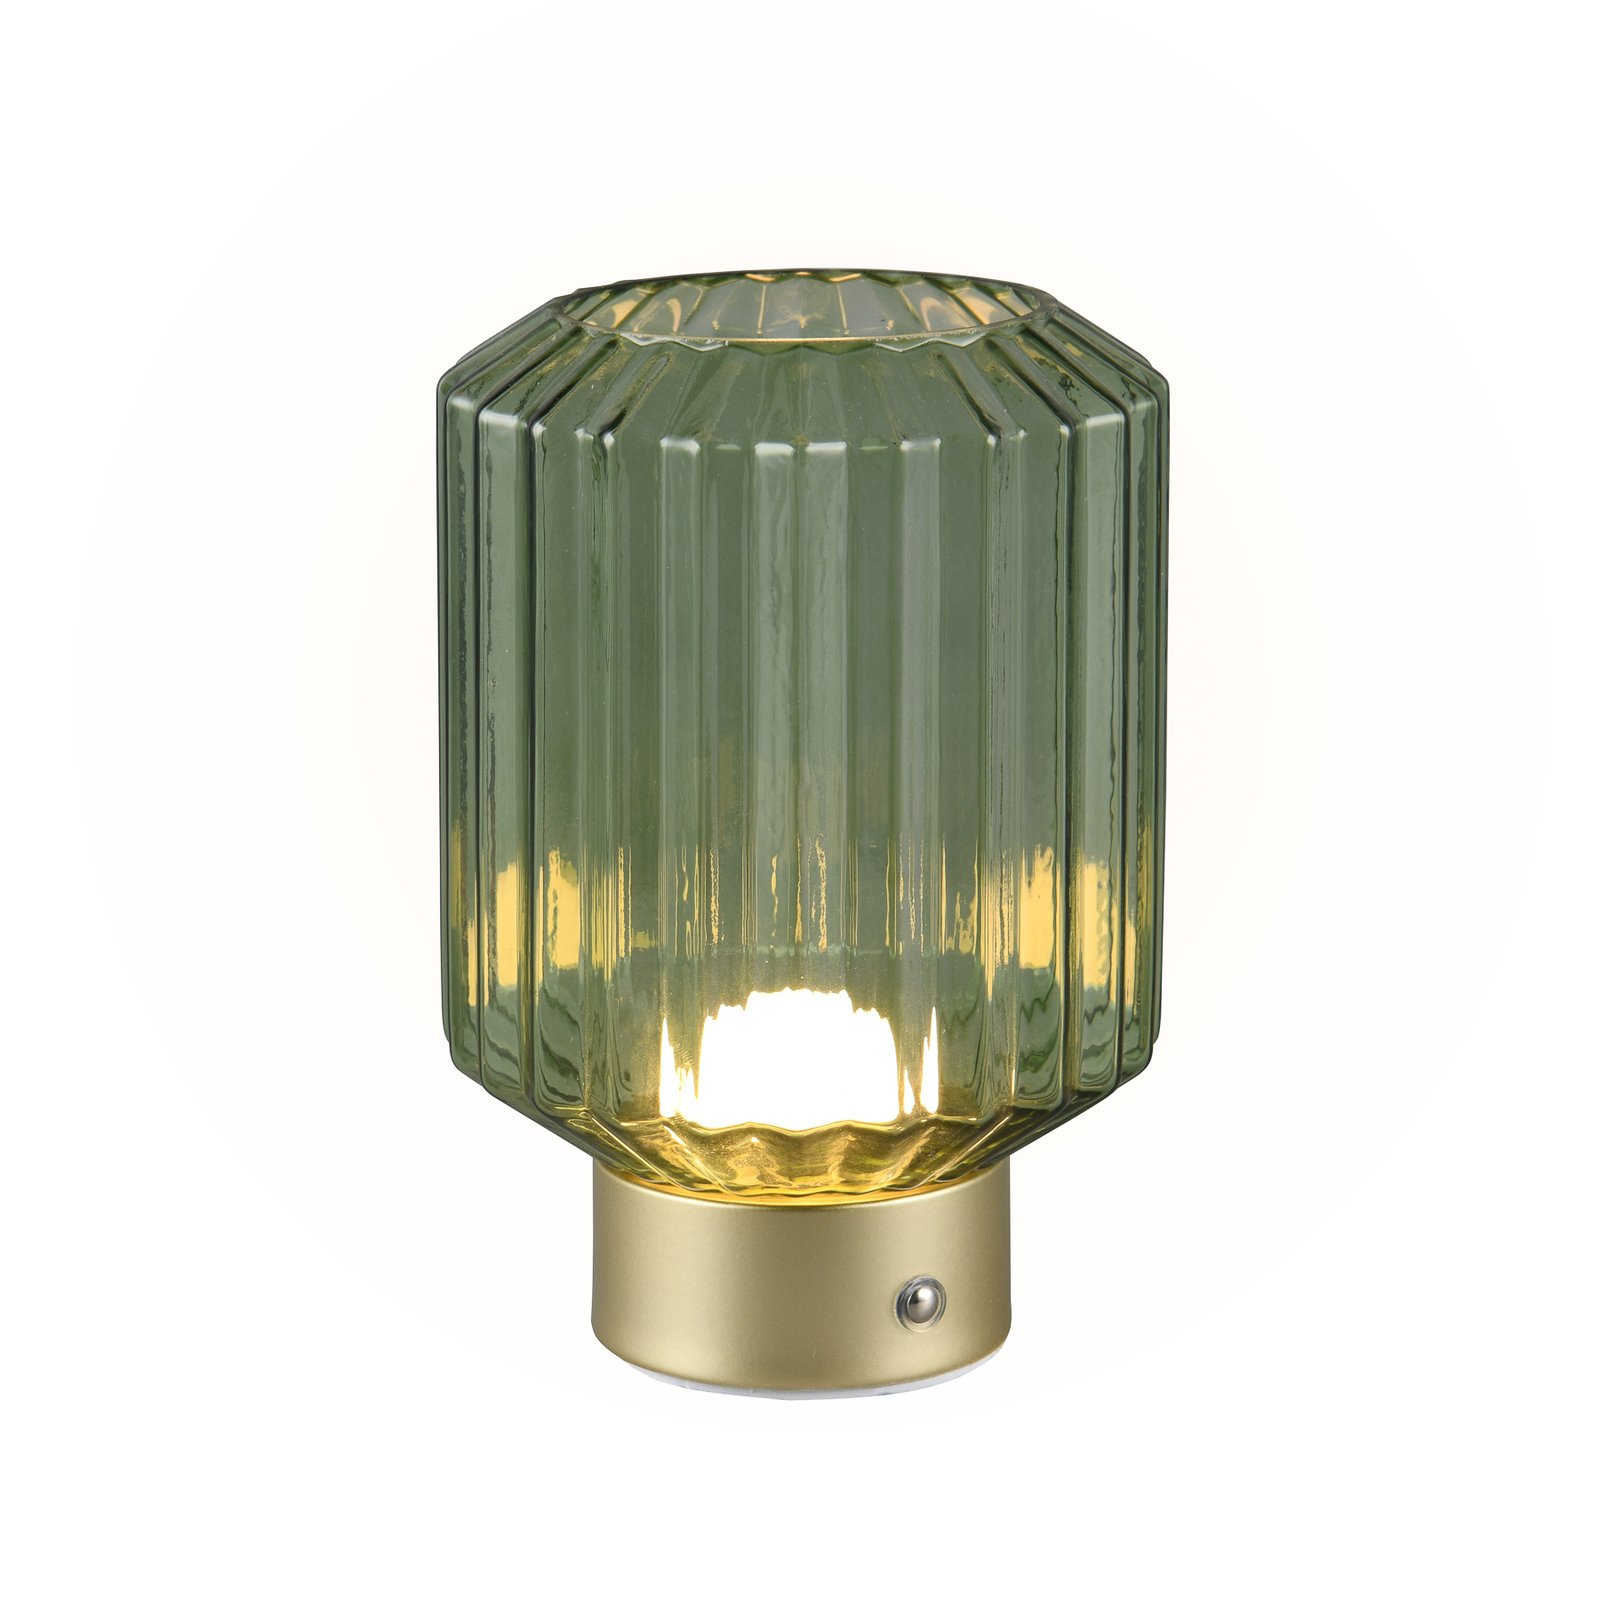 Lord LED uppladdningsbar bordslampa, mässing/grön, höjd 19,5 cm, glas